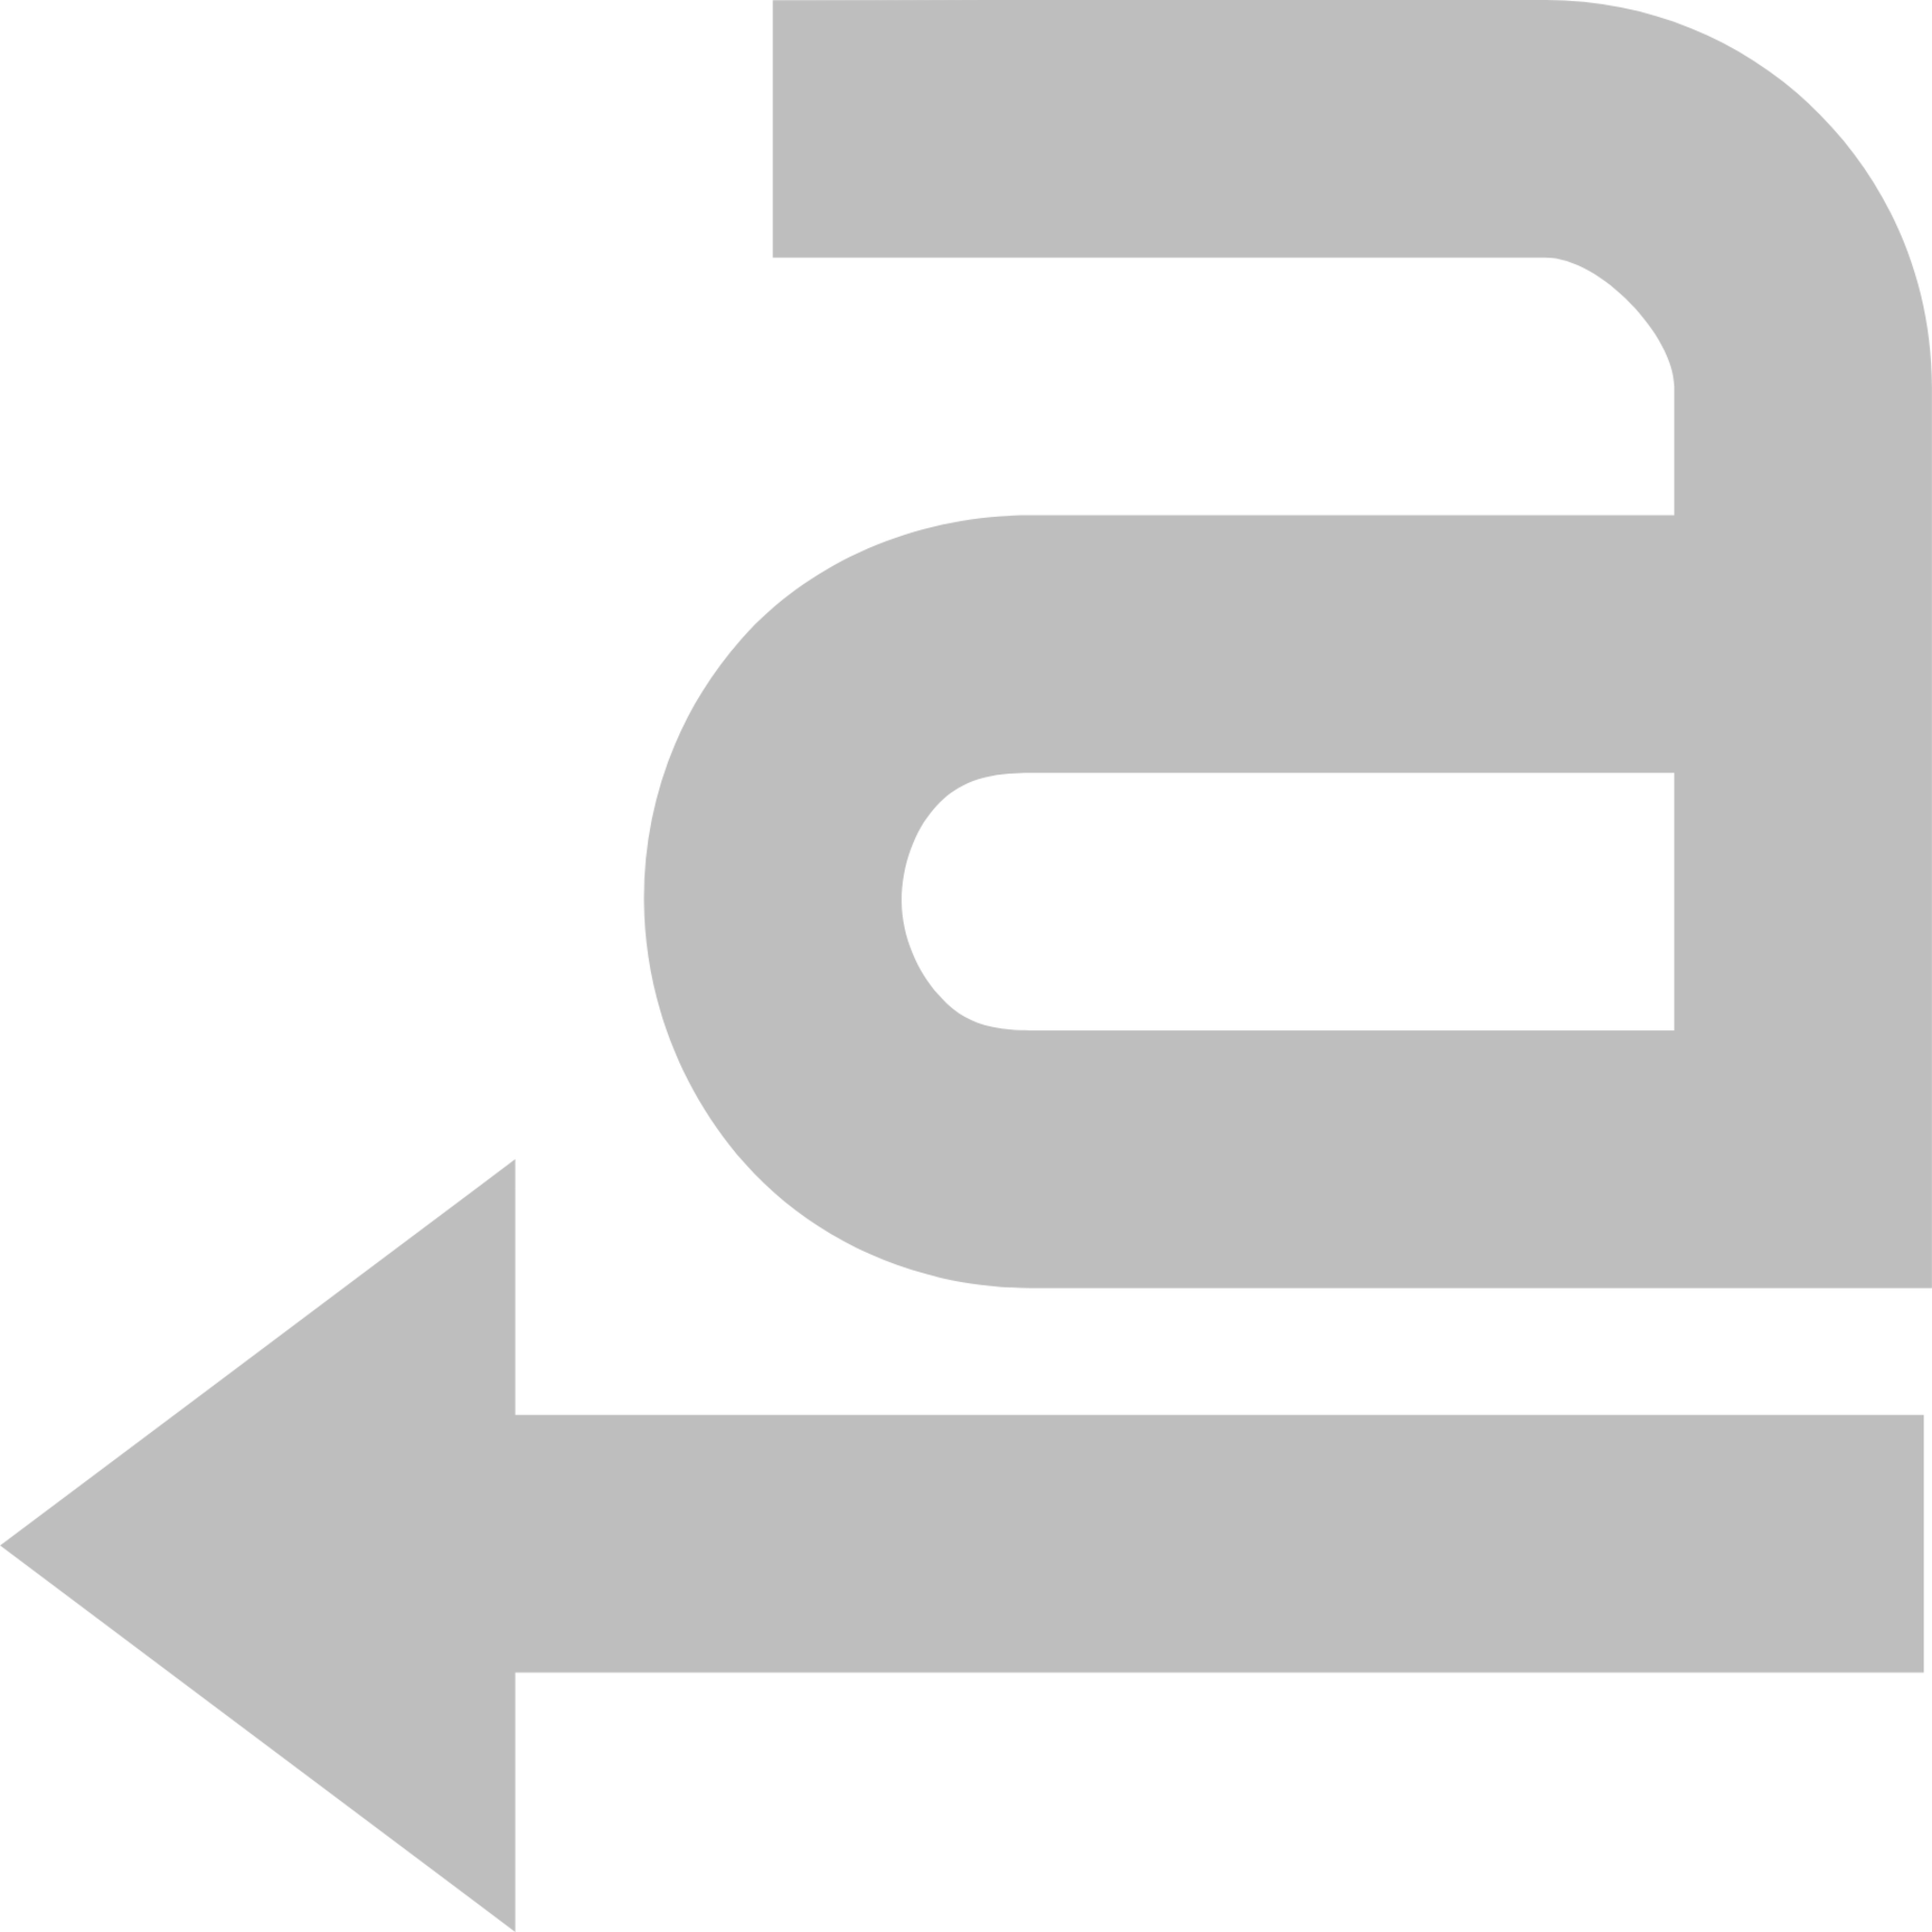 format text direction symbolic rtl icon